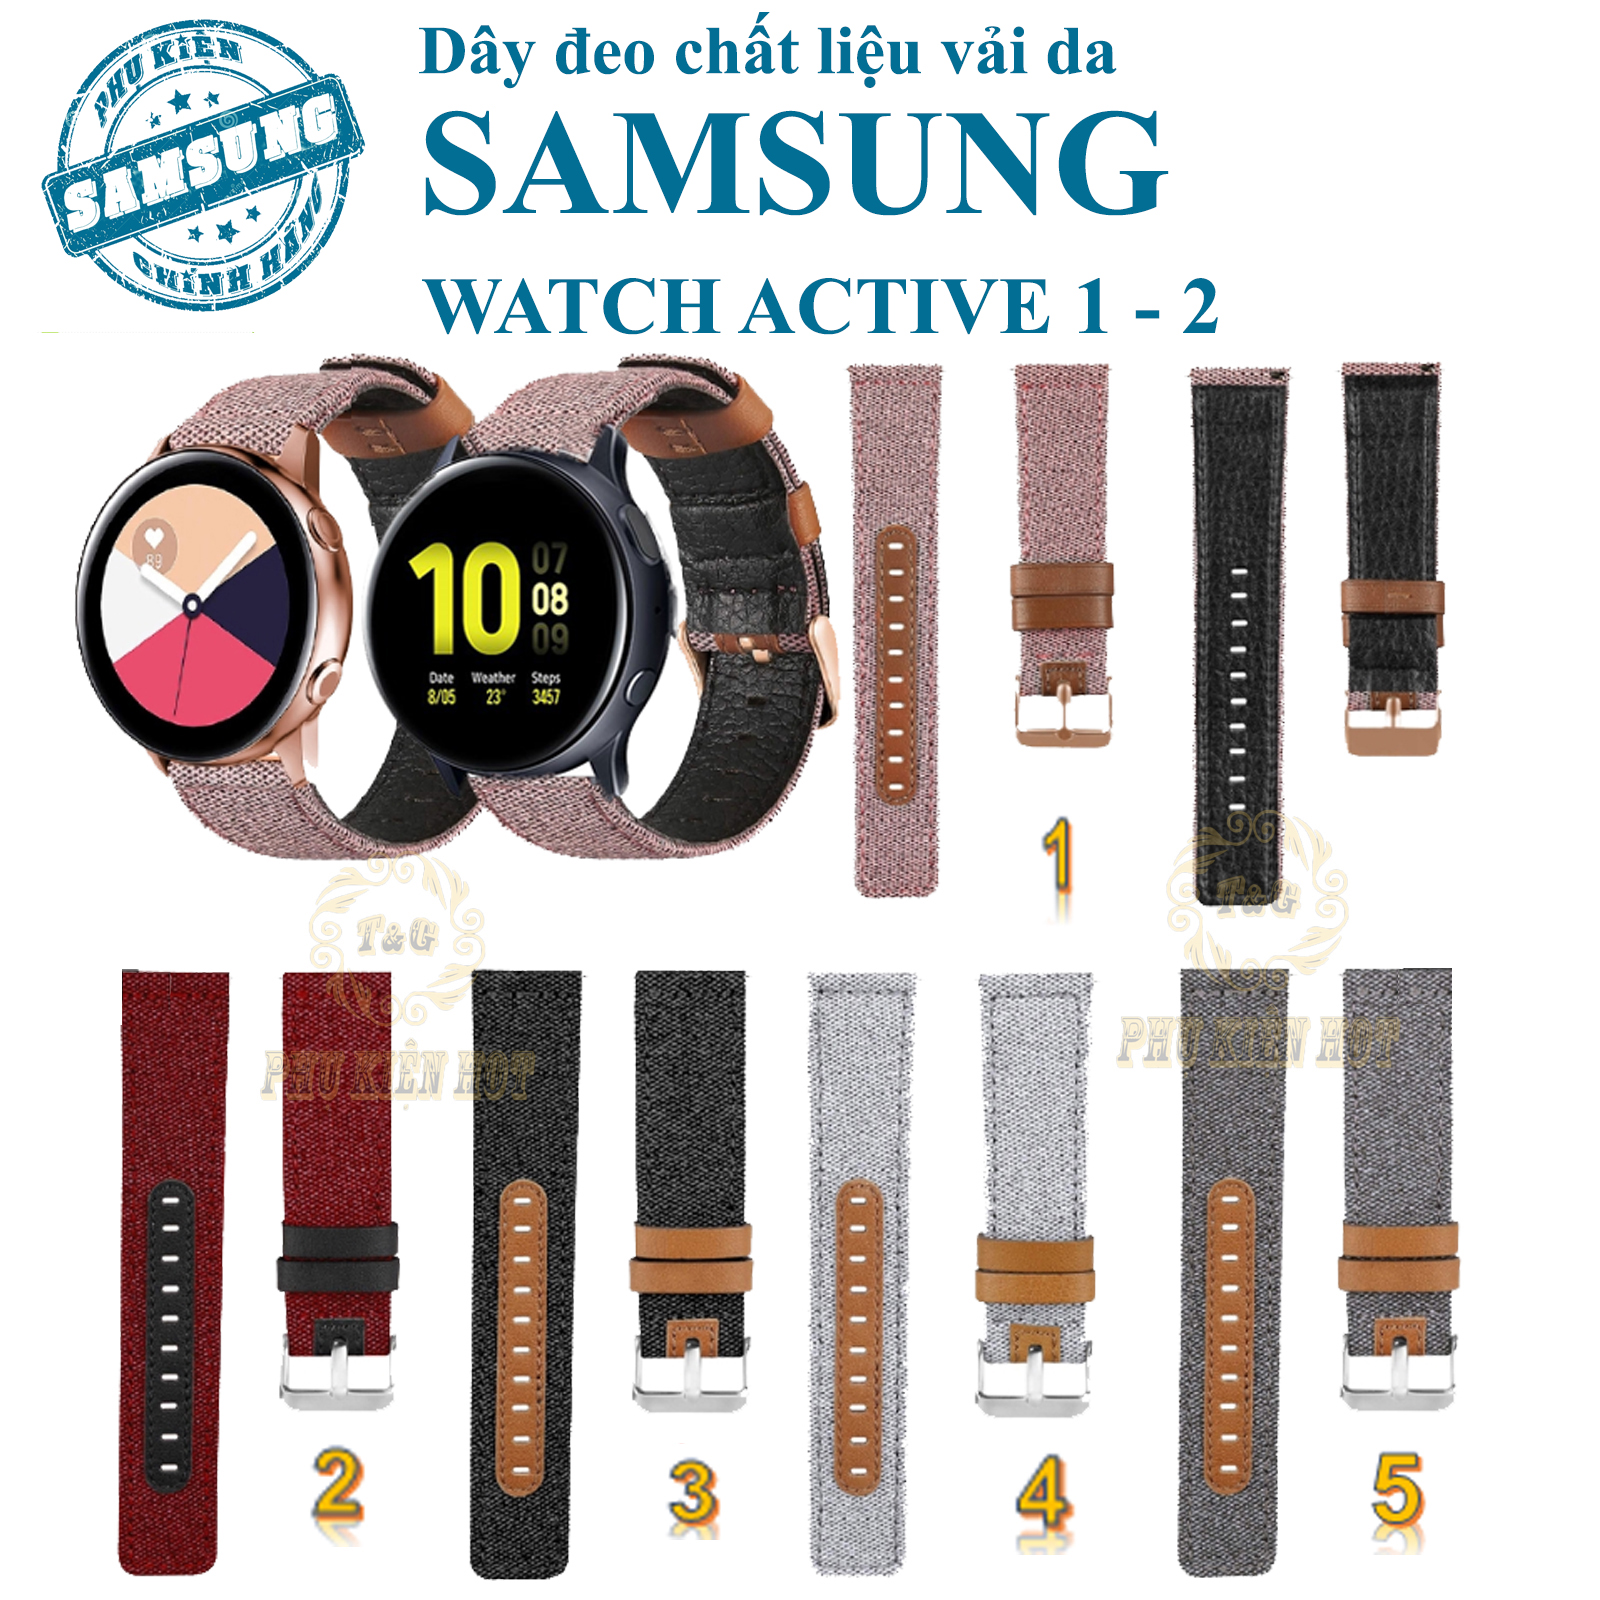 Galaxy Watch Active 2 Dây đeo vải da cho Samsung Galaxy Watch Active 2